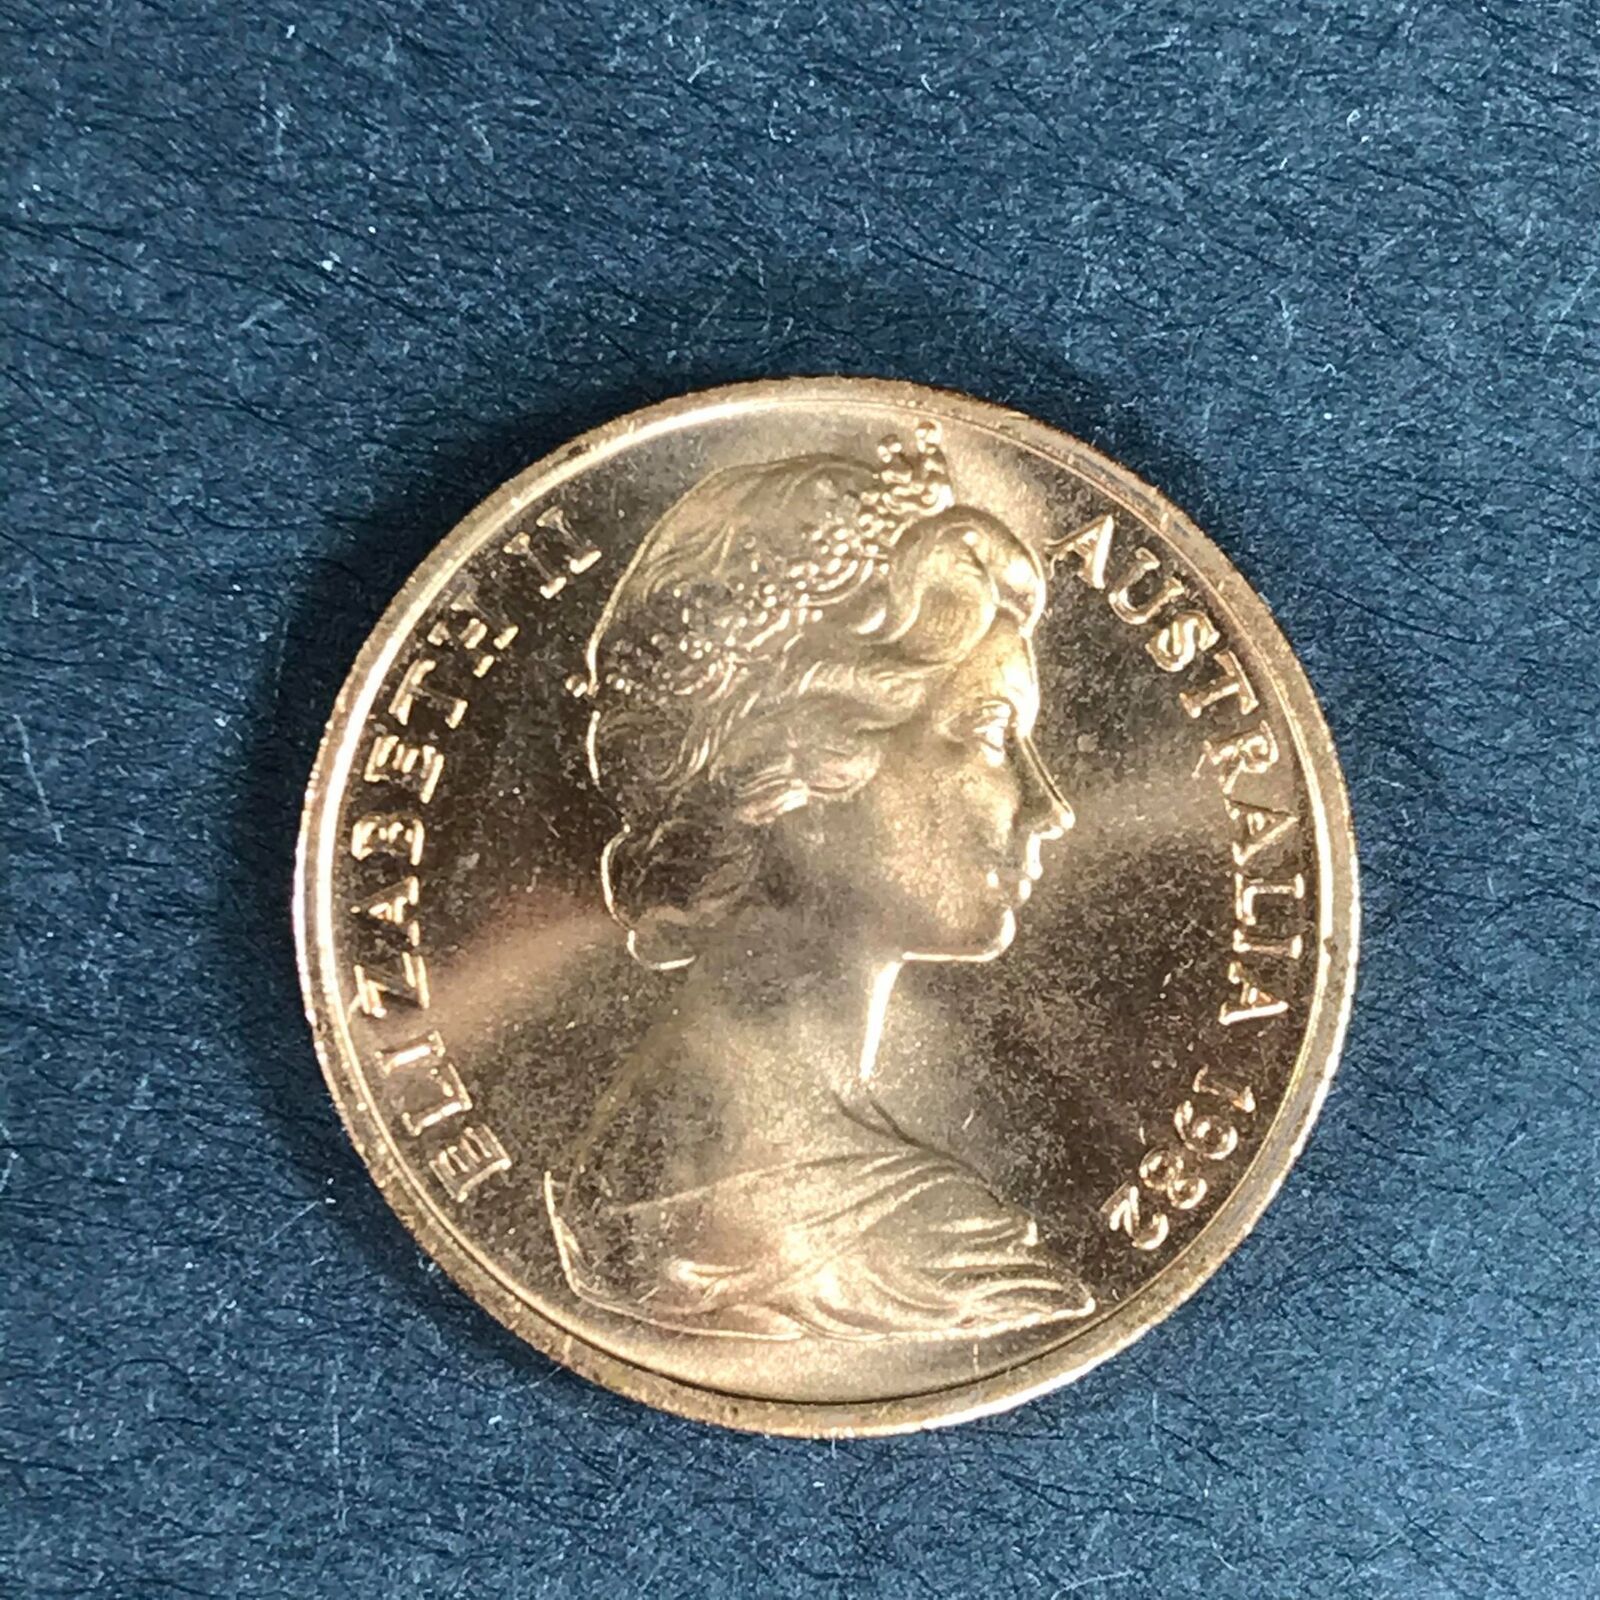 1 x 1982 Uncirculated 1c Royal Australian Mint